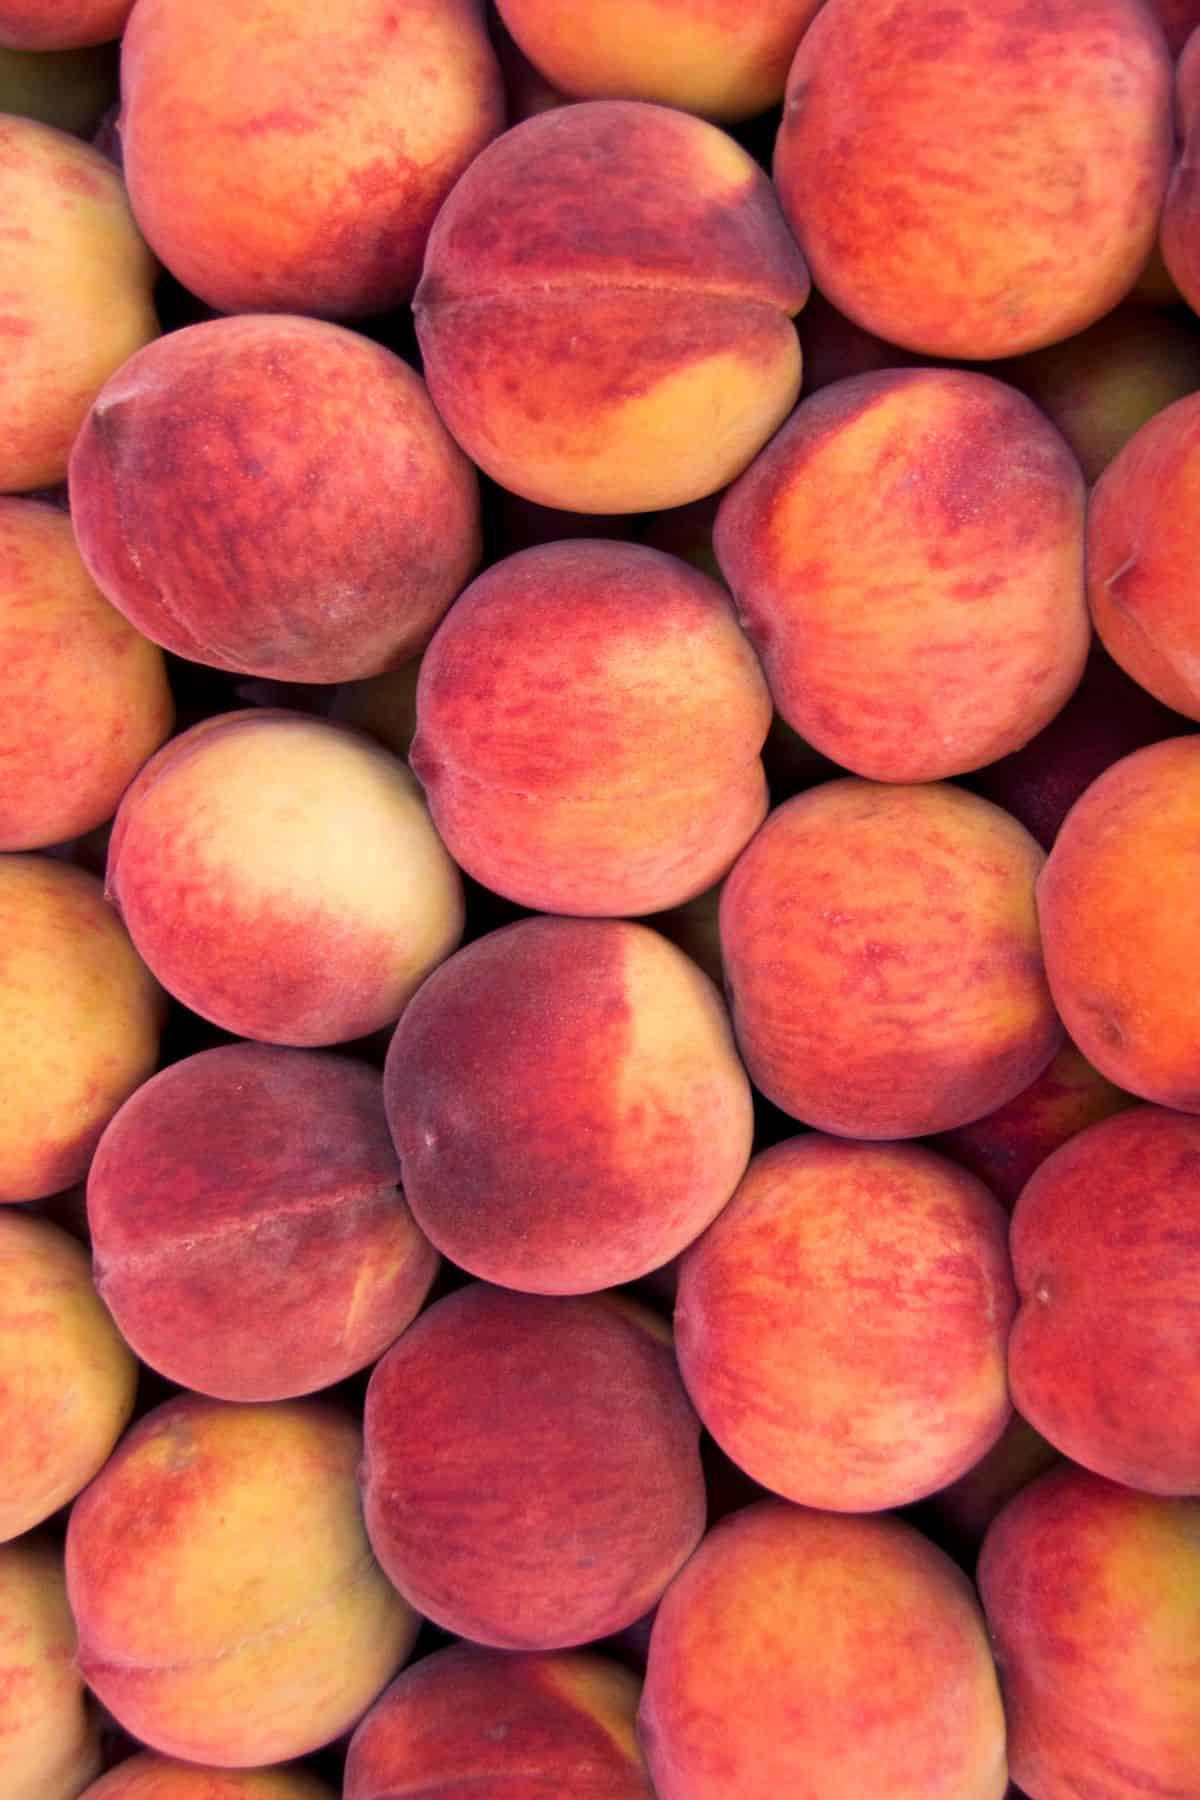 a bushel of peaches.